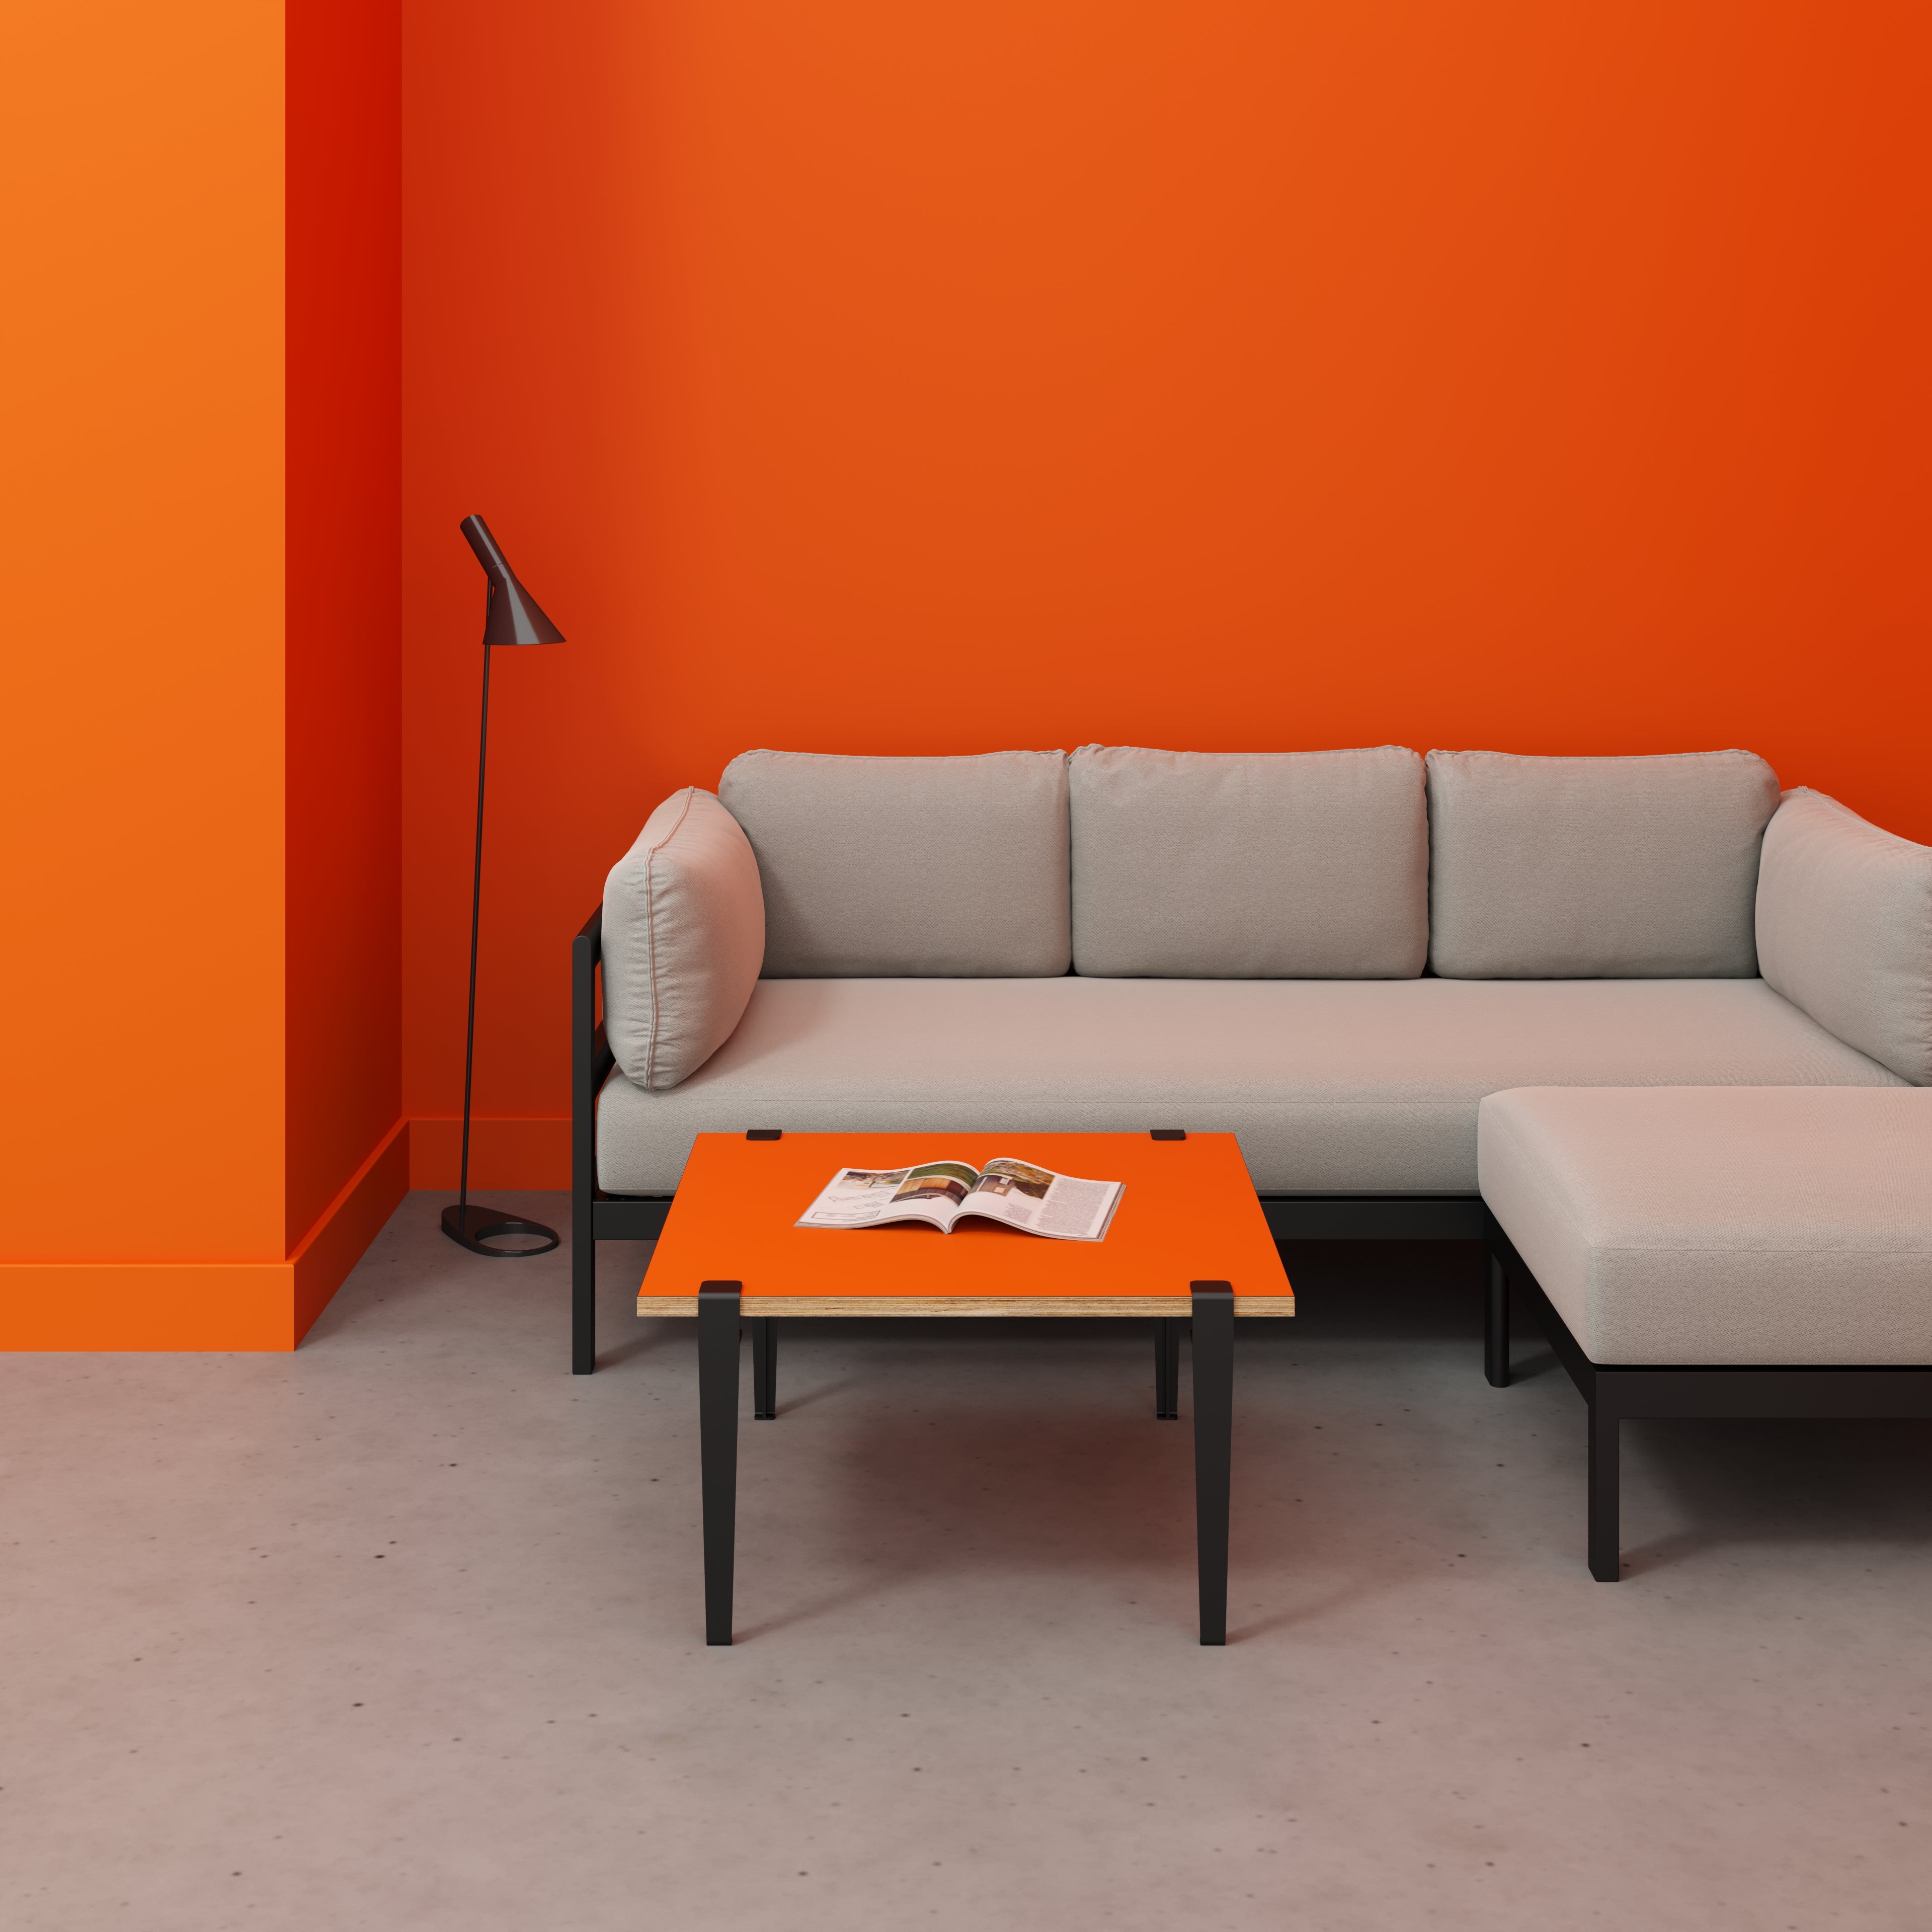 Coffee Table with Black Tiptoe Legs - Formica Levante Orange - 800(w) x 800(d) x 430(h)